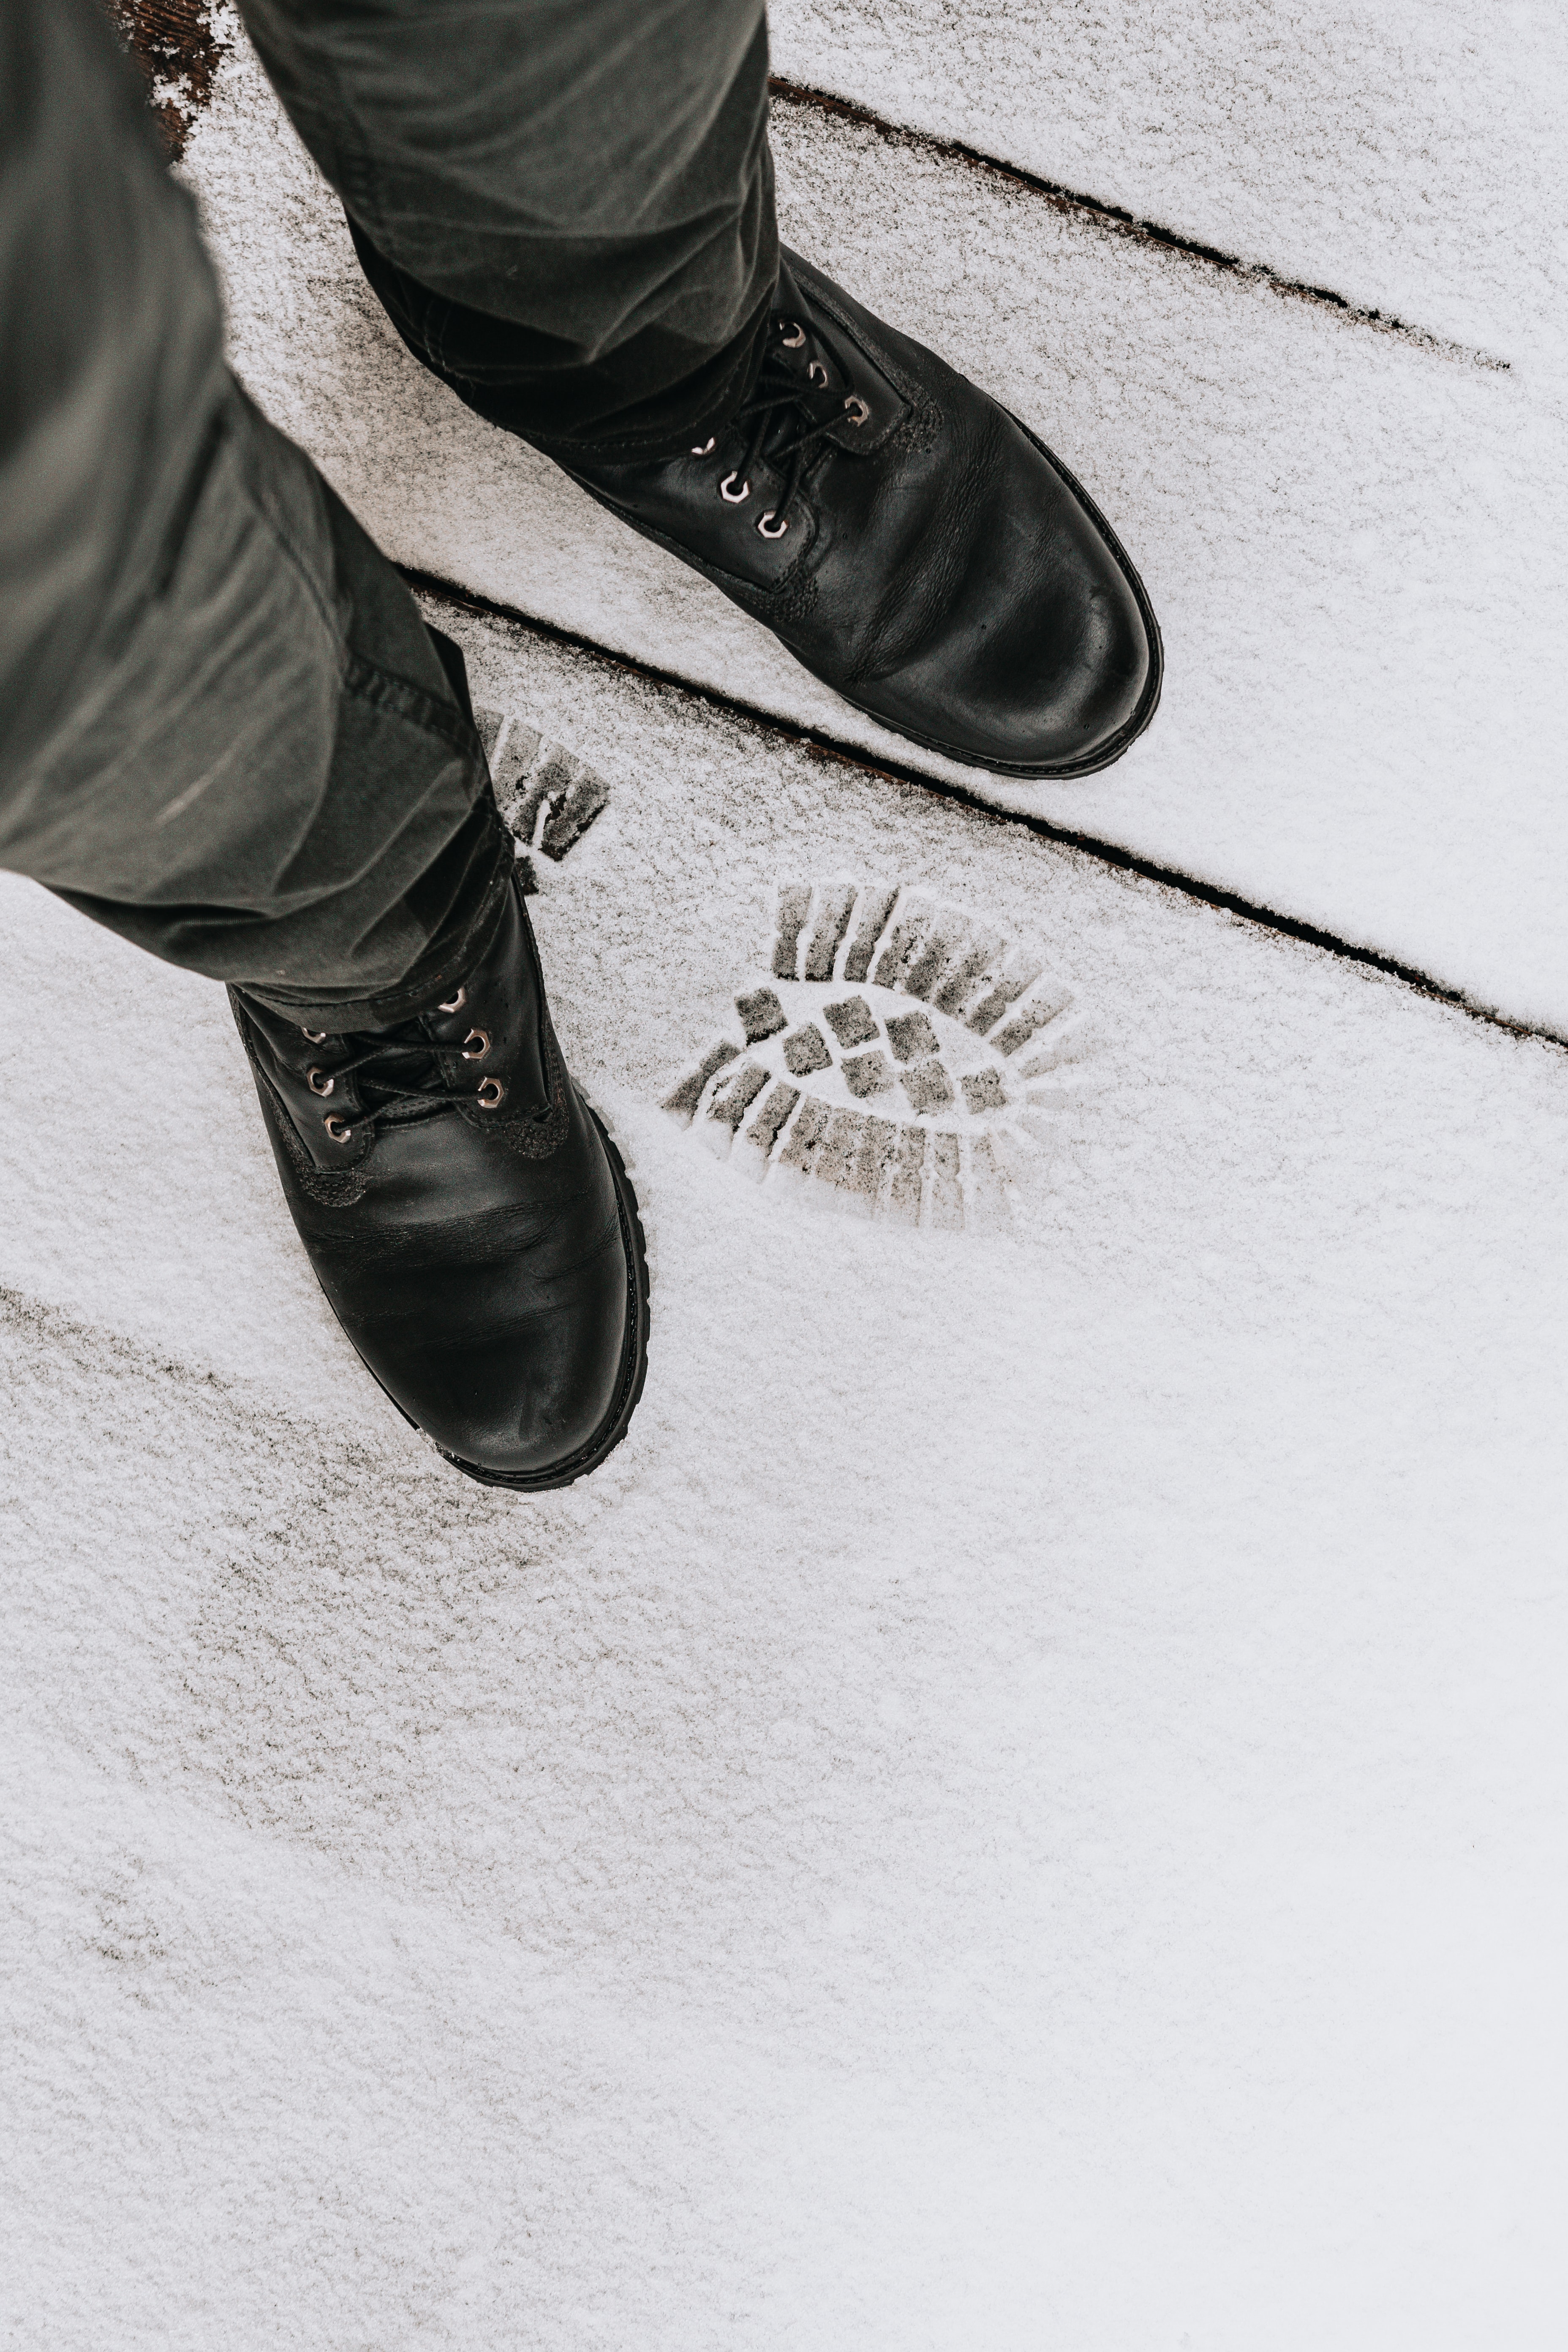 snow, miscellanea, miscellaneous, legs, boots, track, shoes, trace